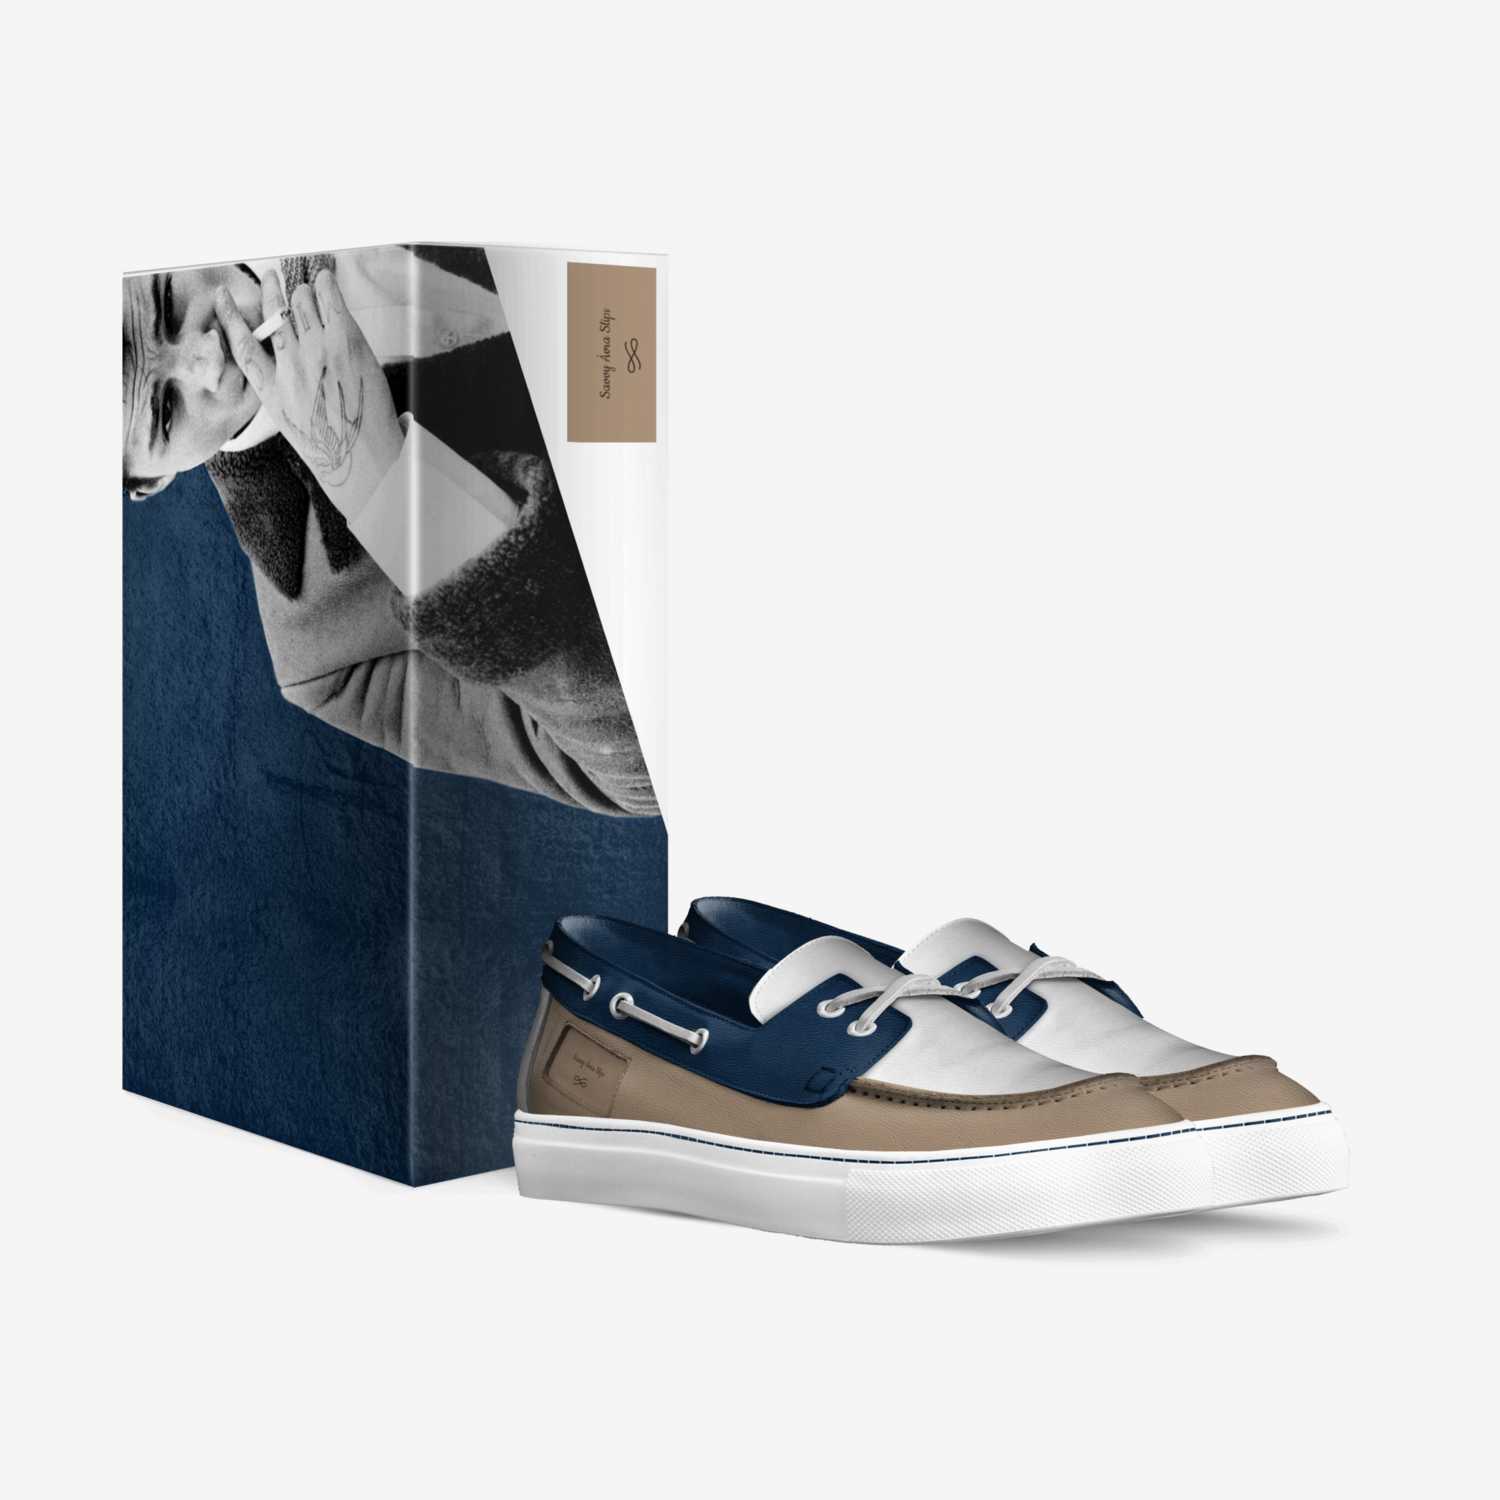 Savvy Ávra Slips custom made in Italy shoes by Pedro Covil | Box view